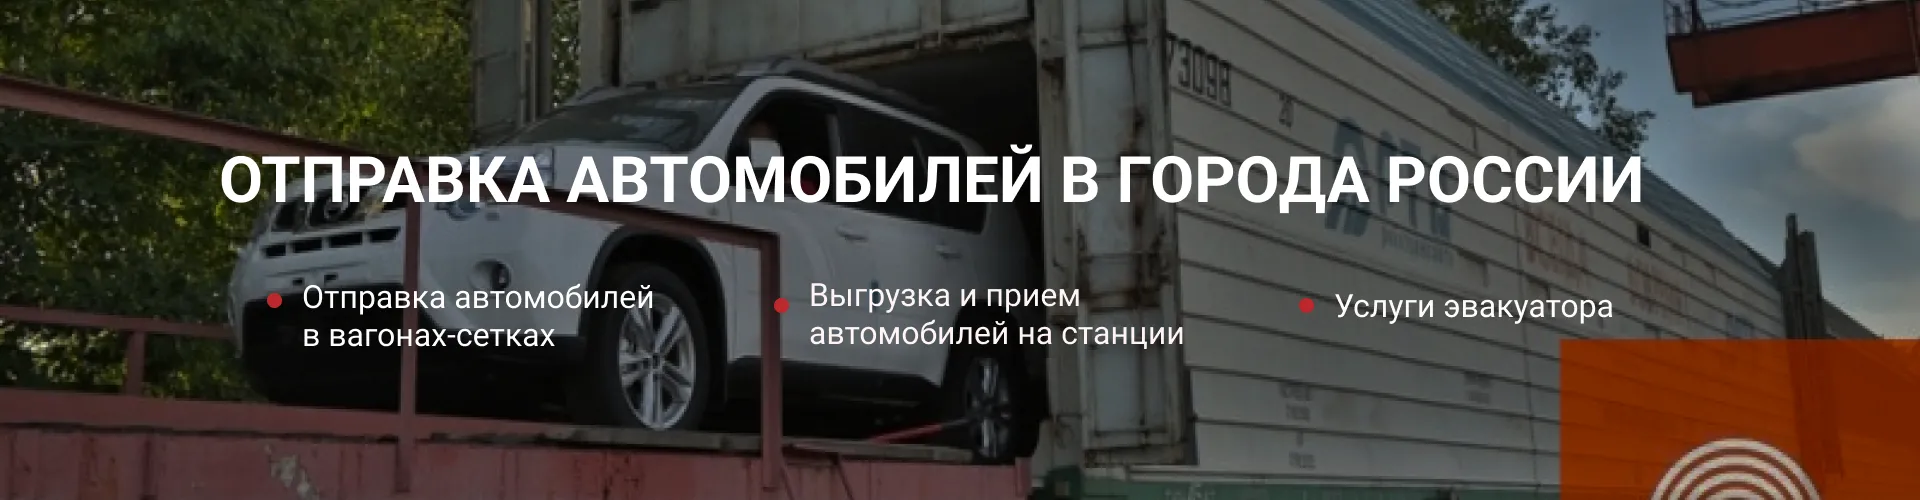 Отправка авто от 90 000 рублей